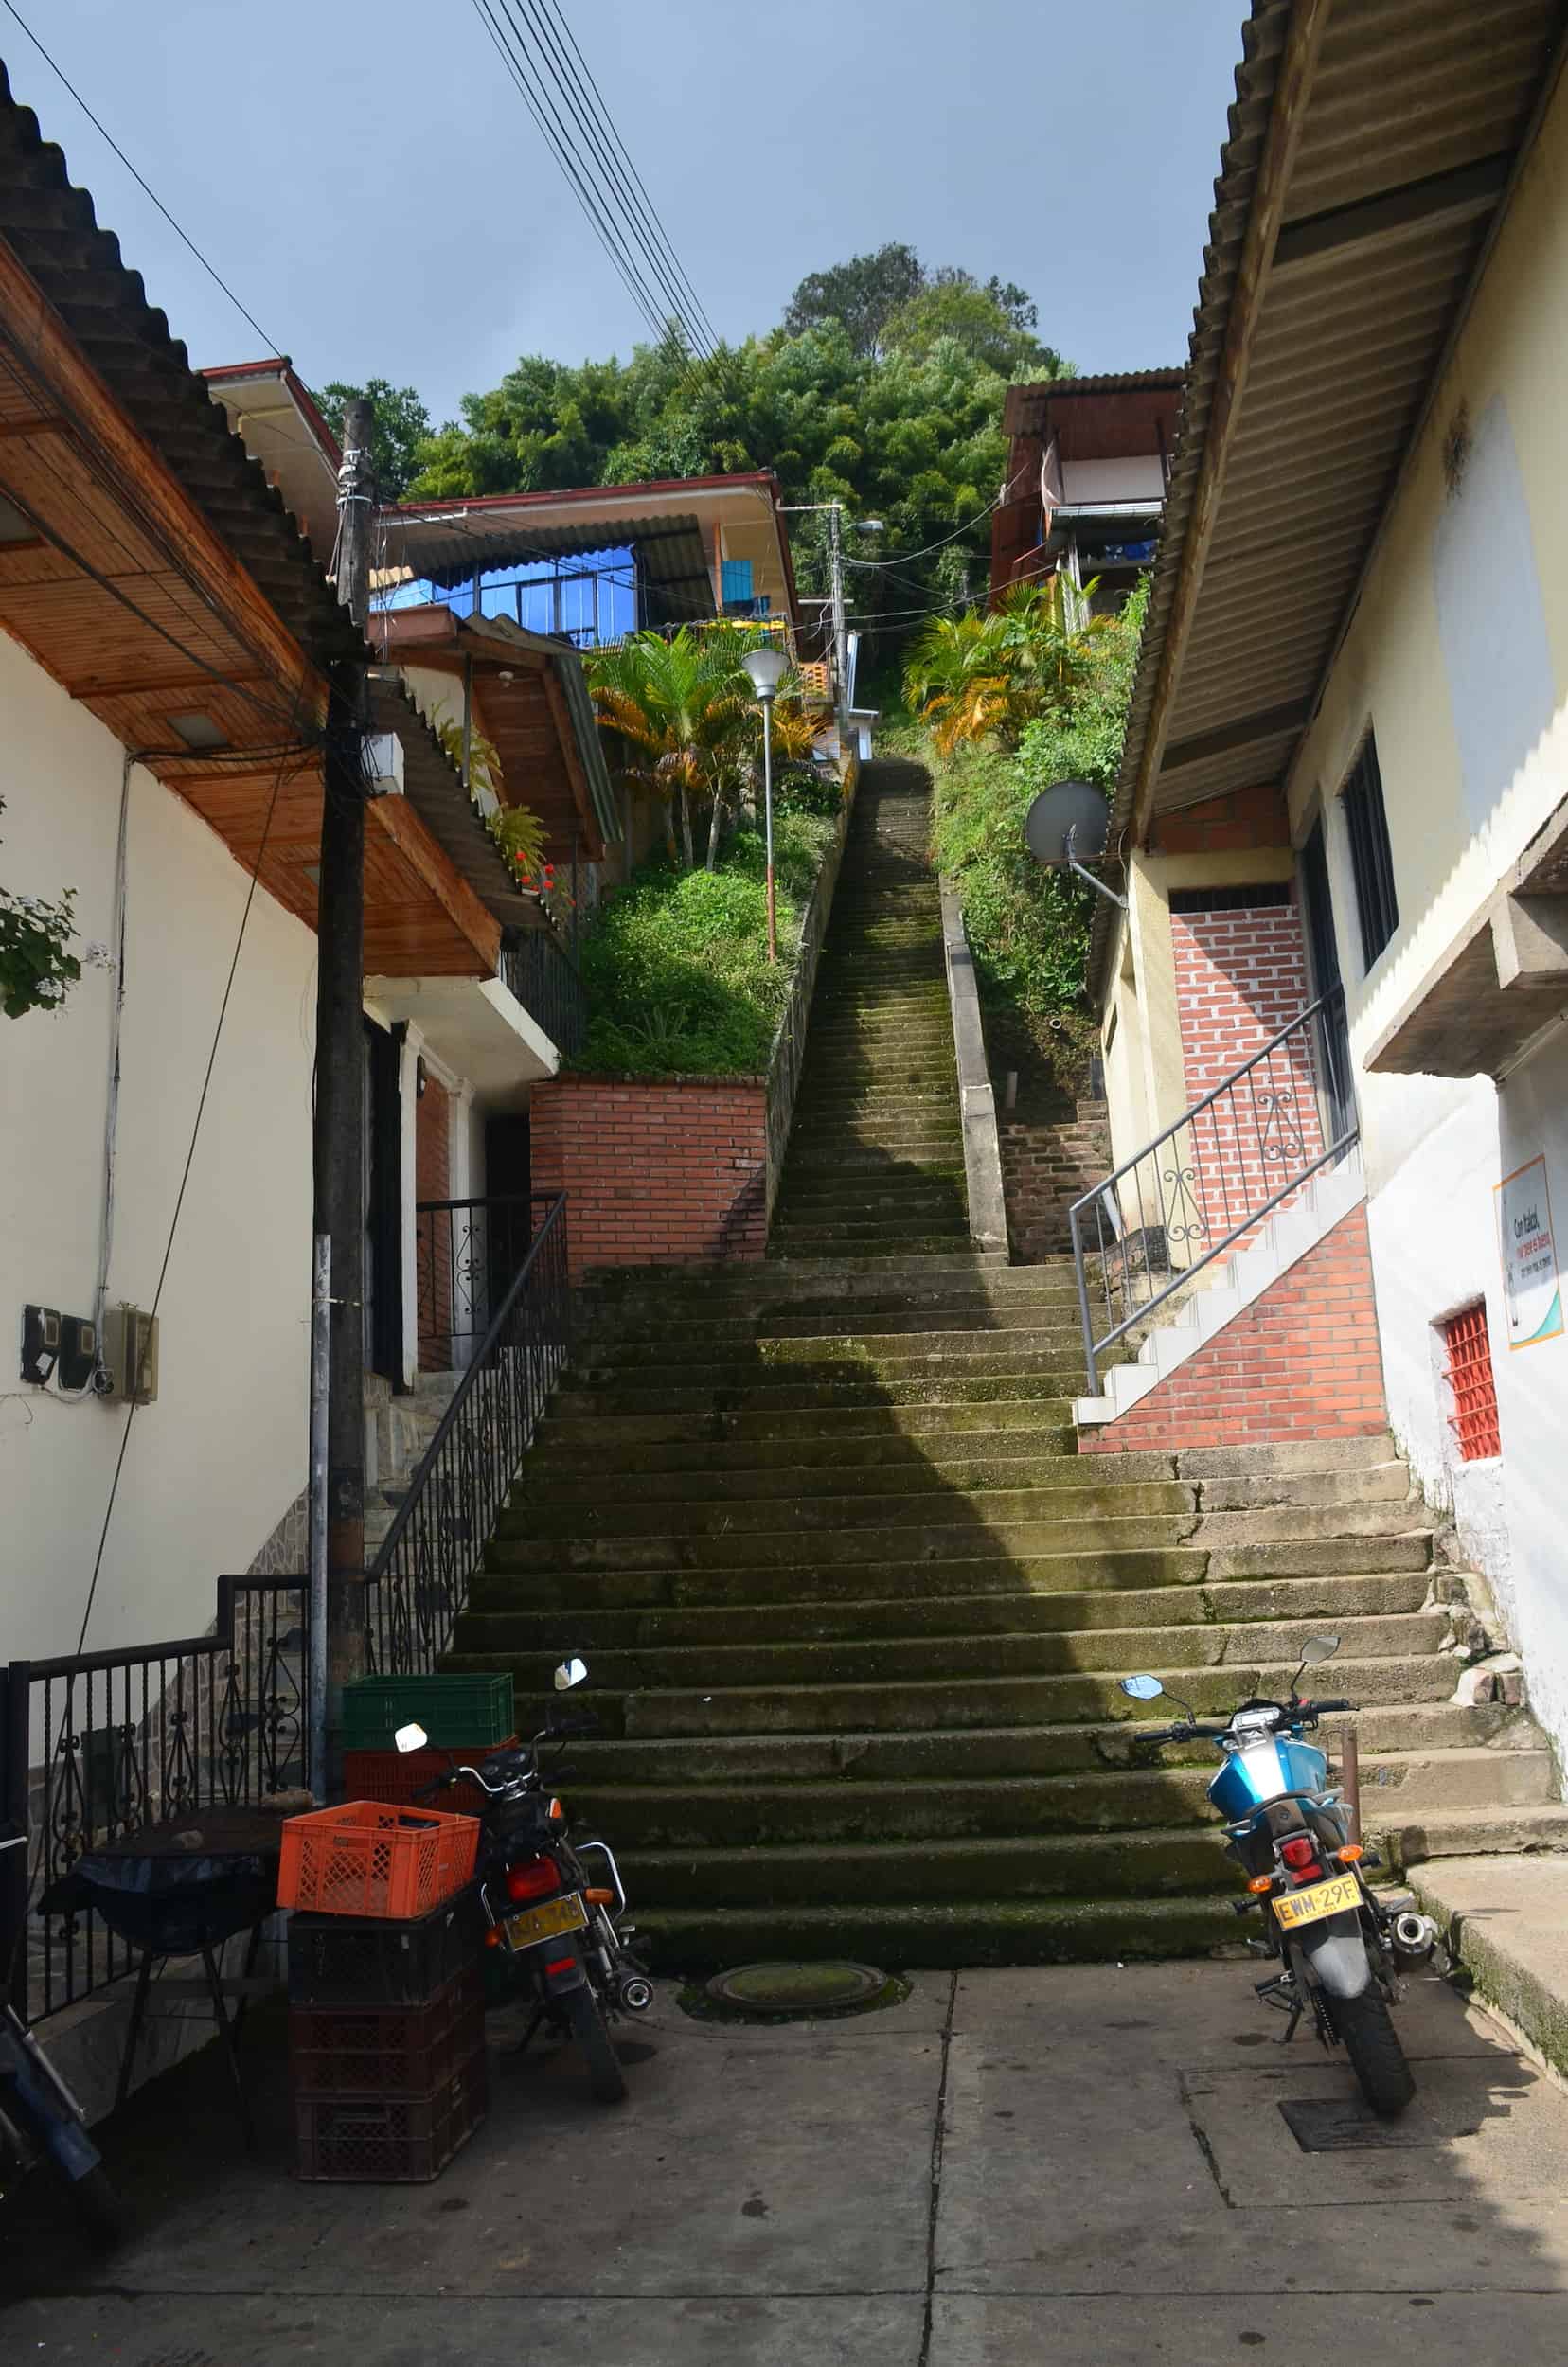 Steep stairway in Balboa, Risaralda, Colombia